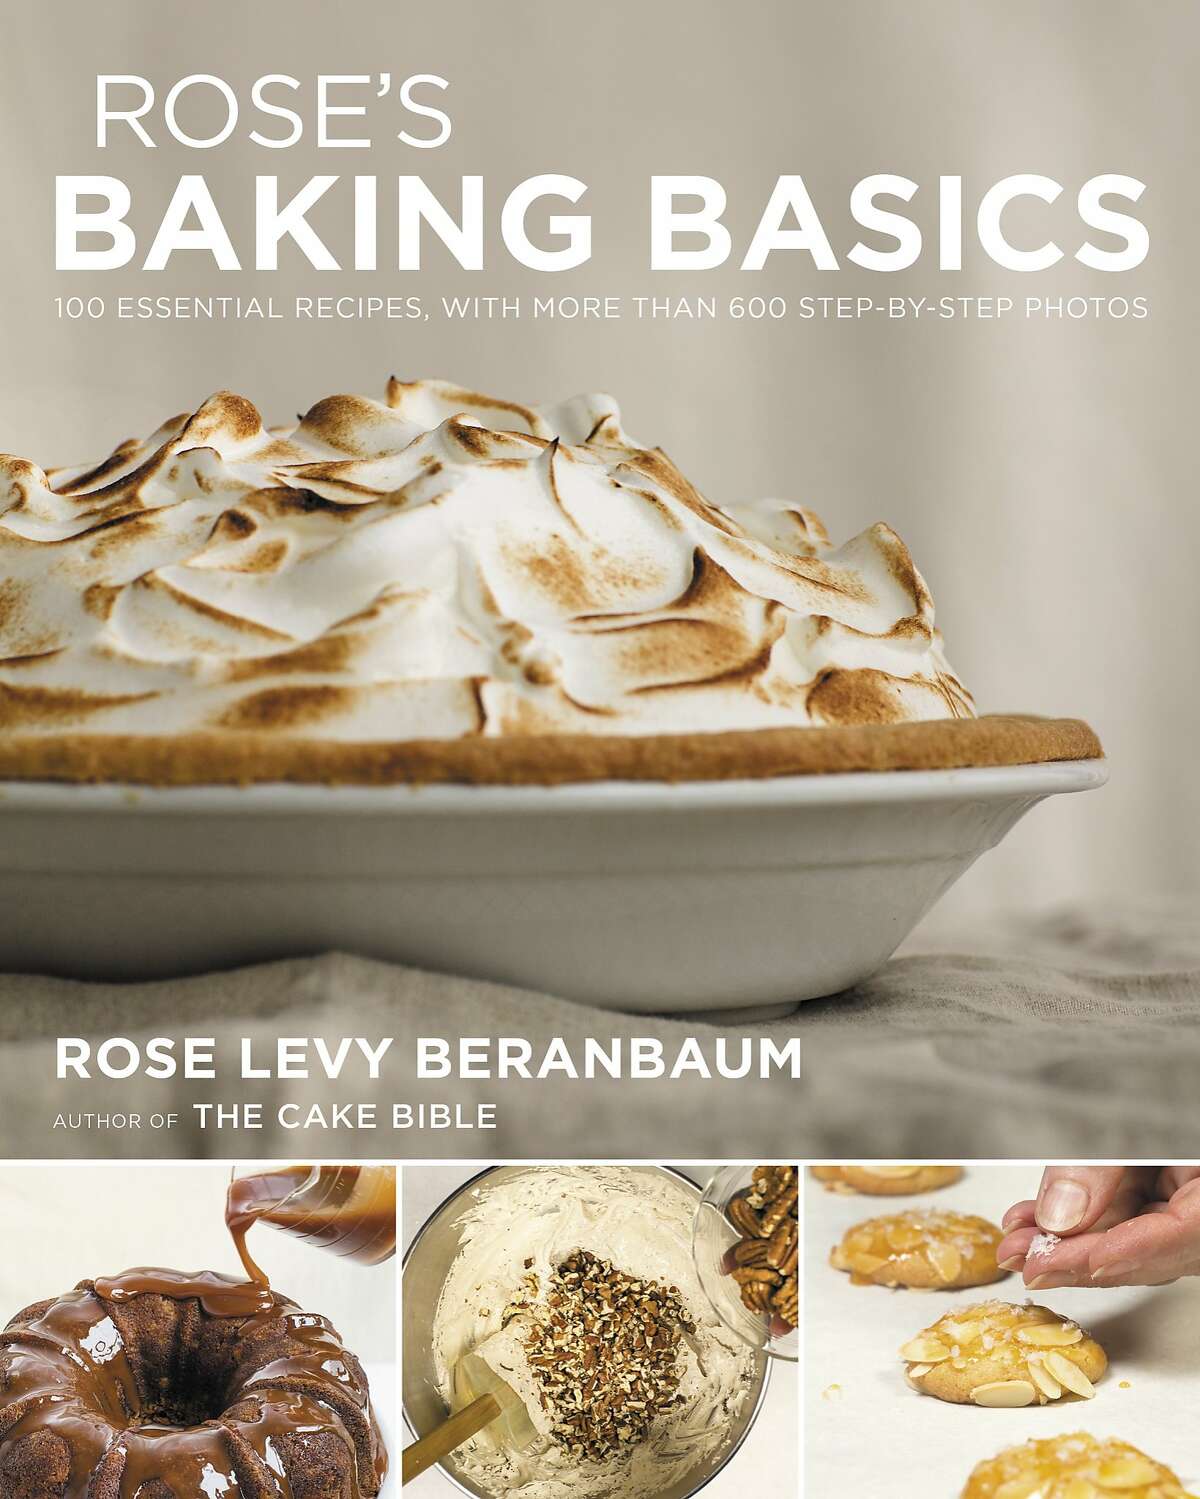 "Rose's Baking Basics," by Rose Levy Beranbaum (Houghton Mifflin Harcourt; $35)